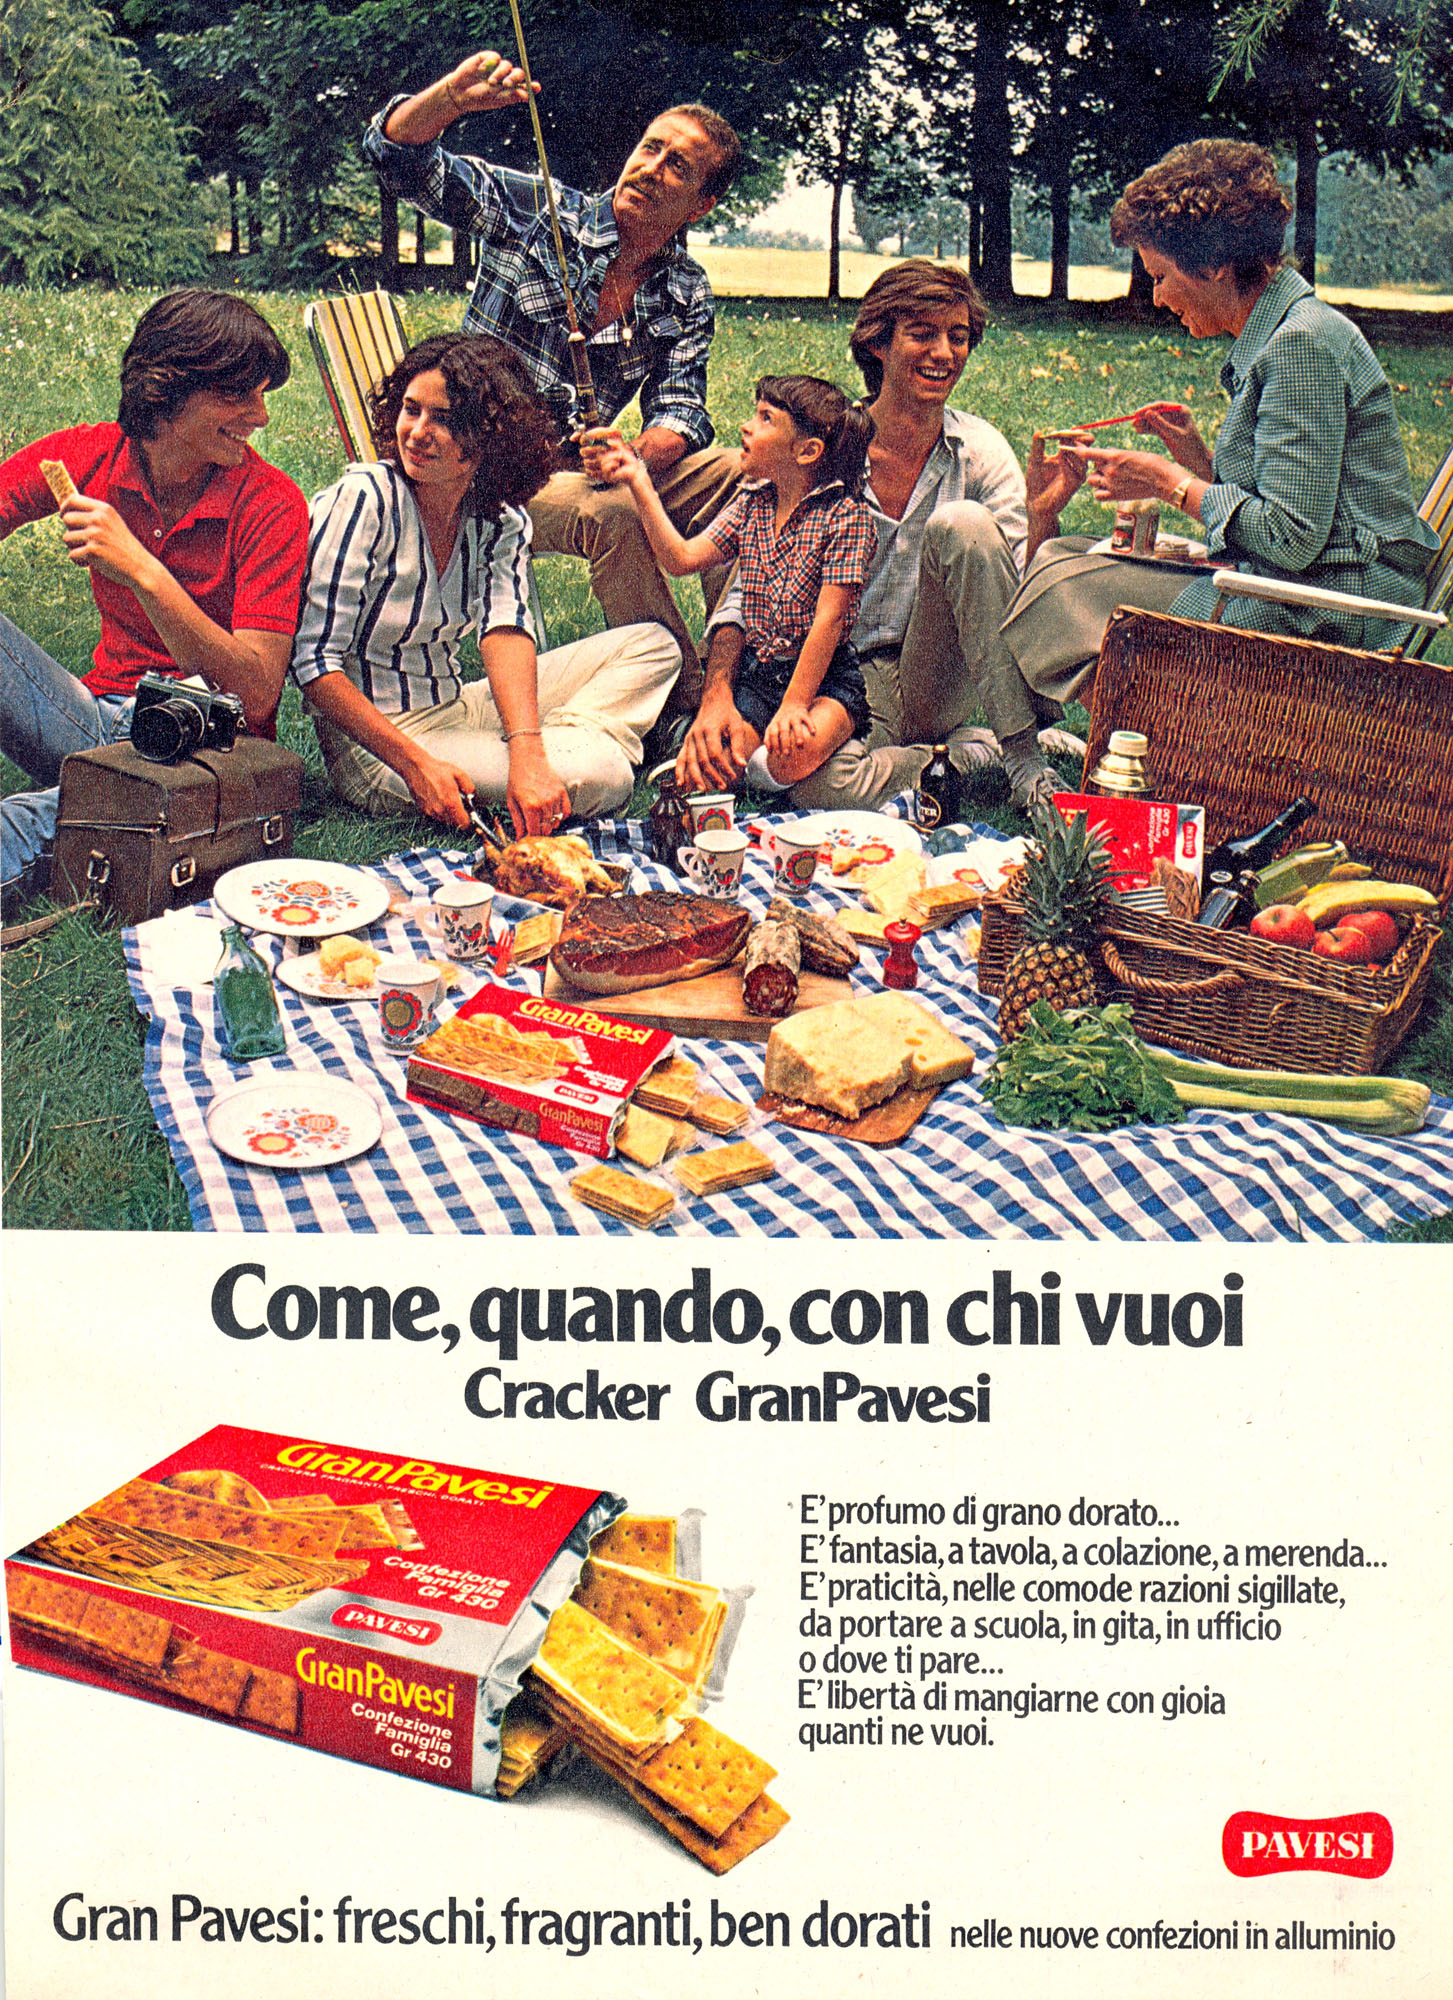 Press advertising Gran Pavesi Crackers, 1978